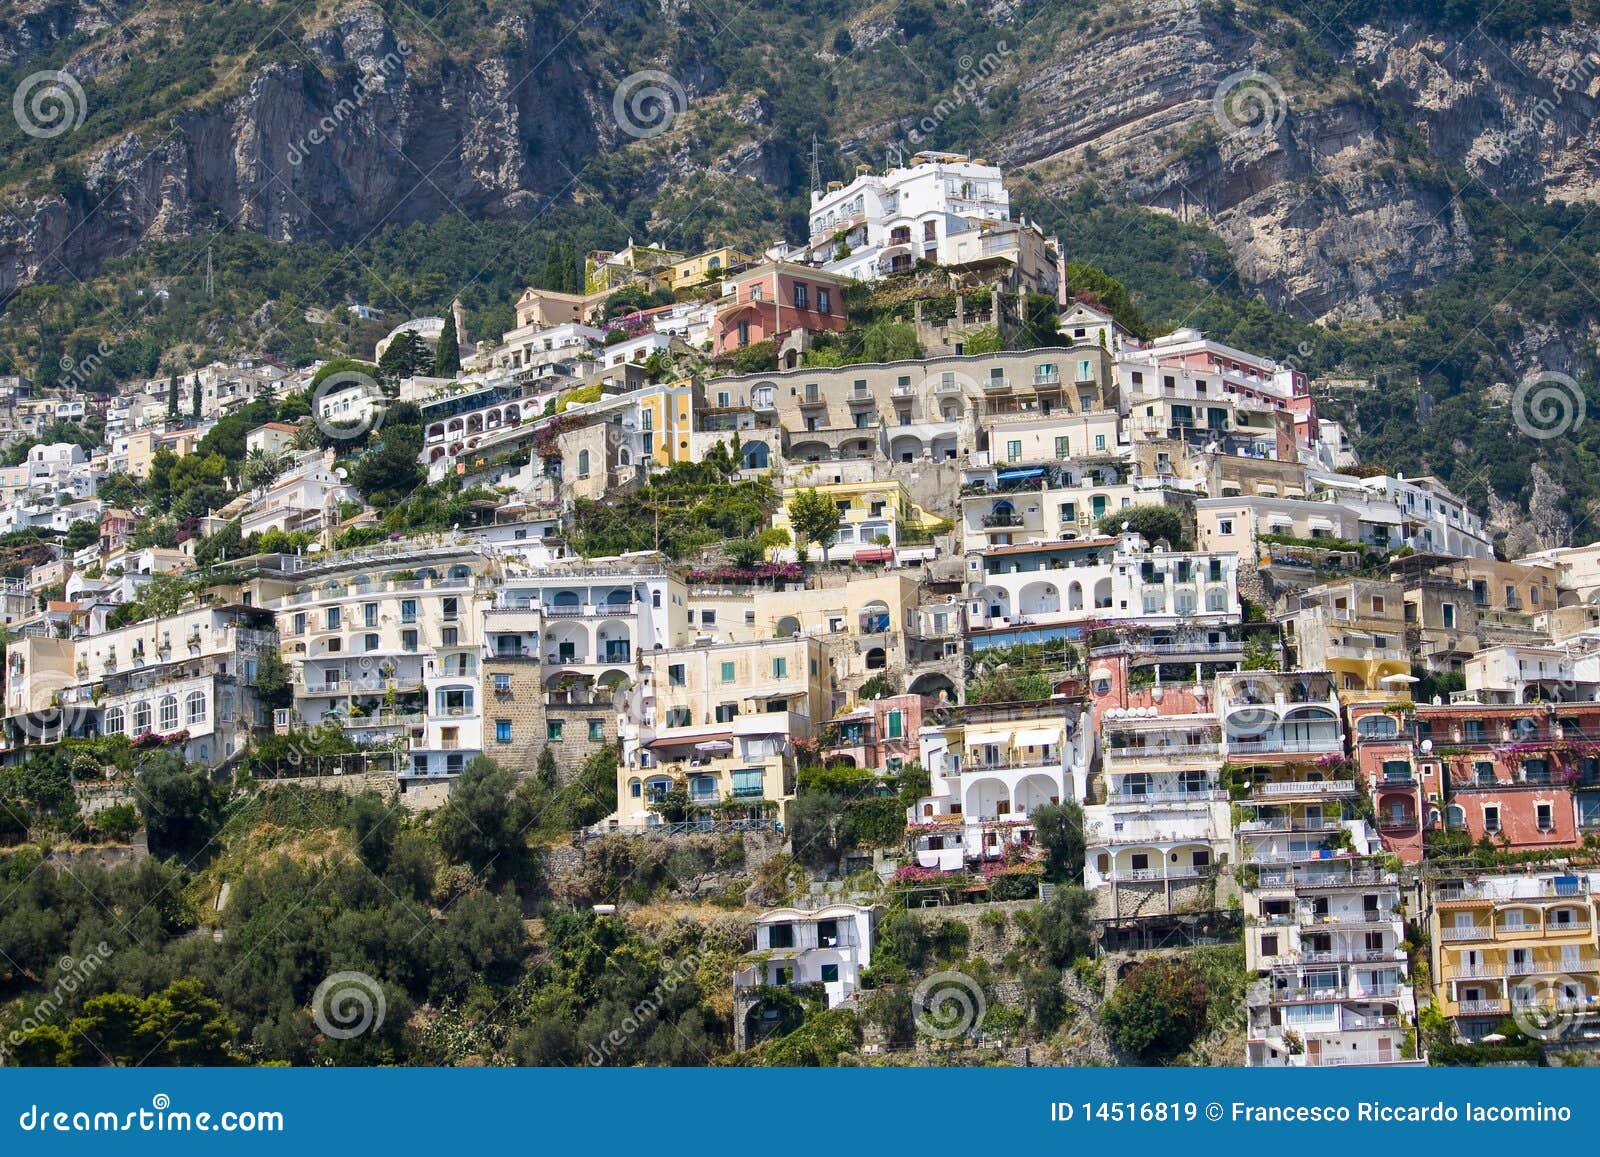 Positano, italy stock image. Image of habitat, coastal - 14516819